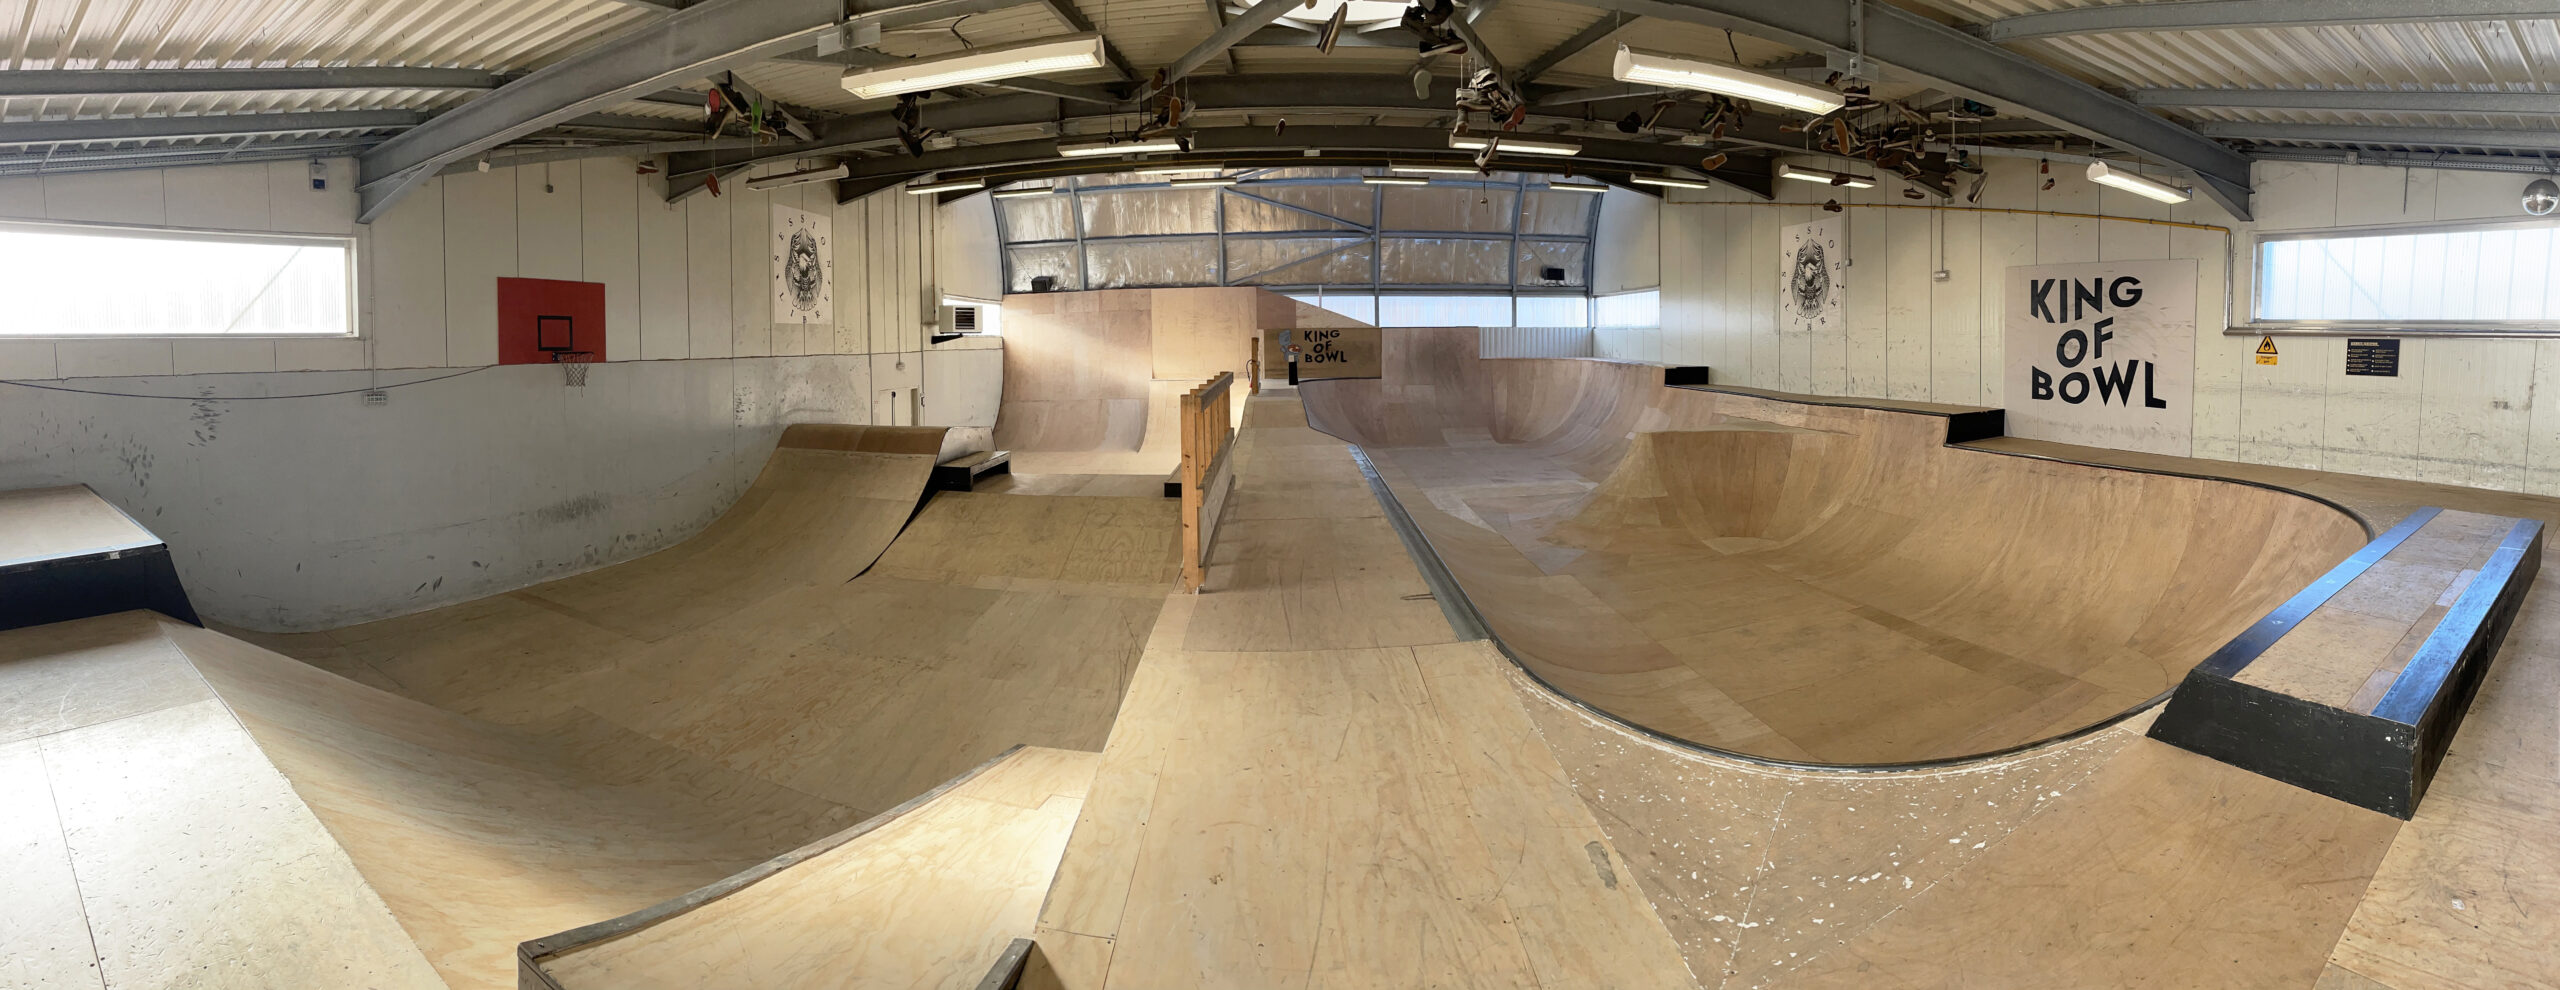 Skatepark indoor